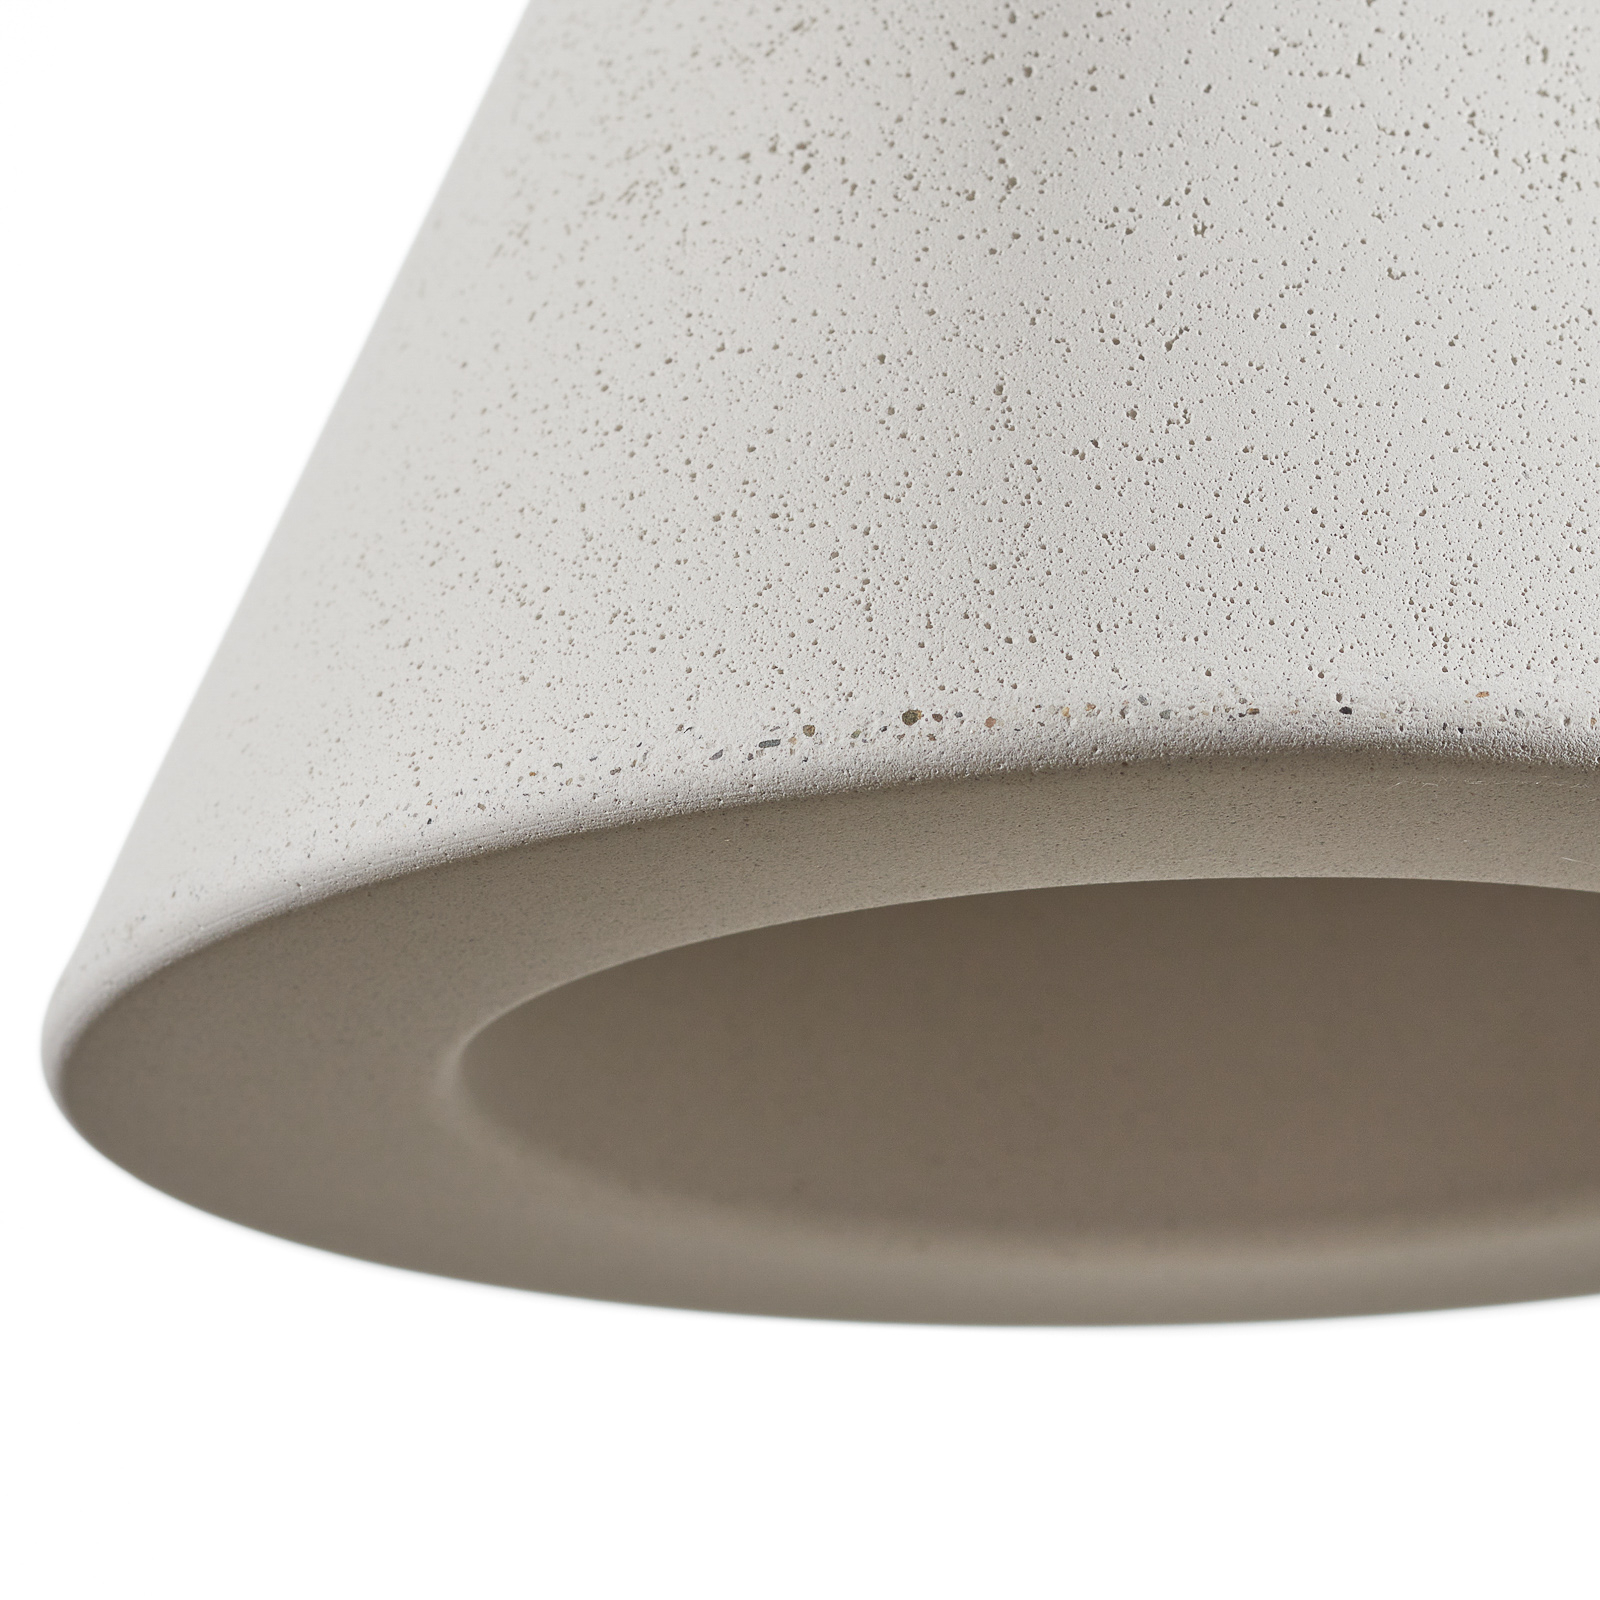 Foscarini Aplomb hængelampe GU10 i beton, hvid